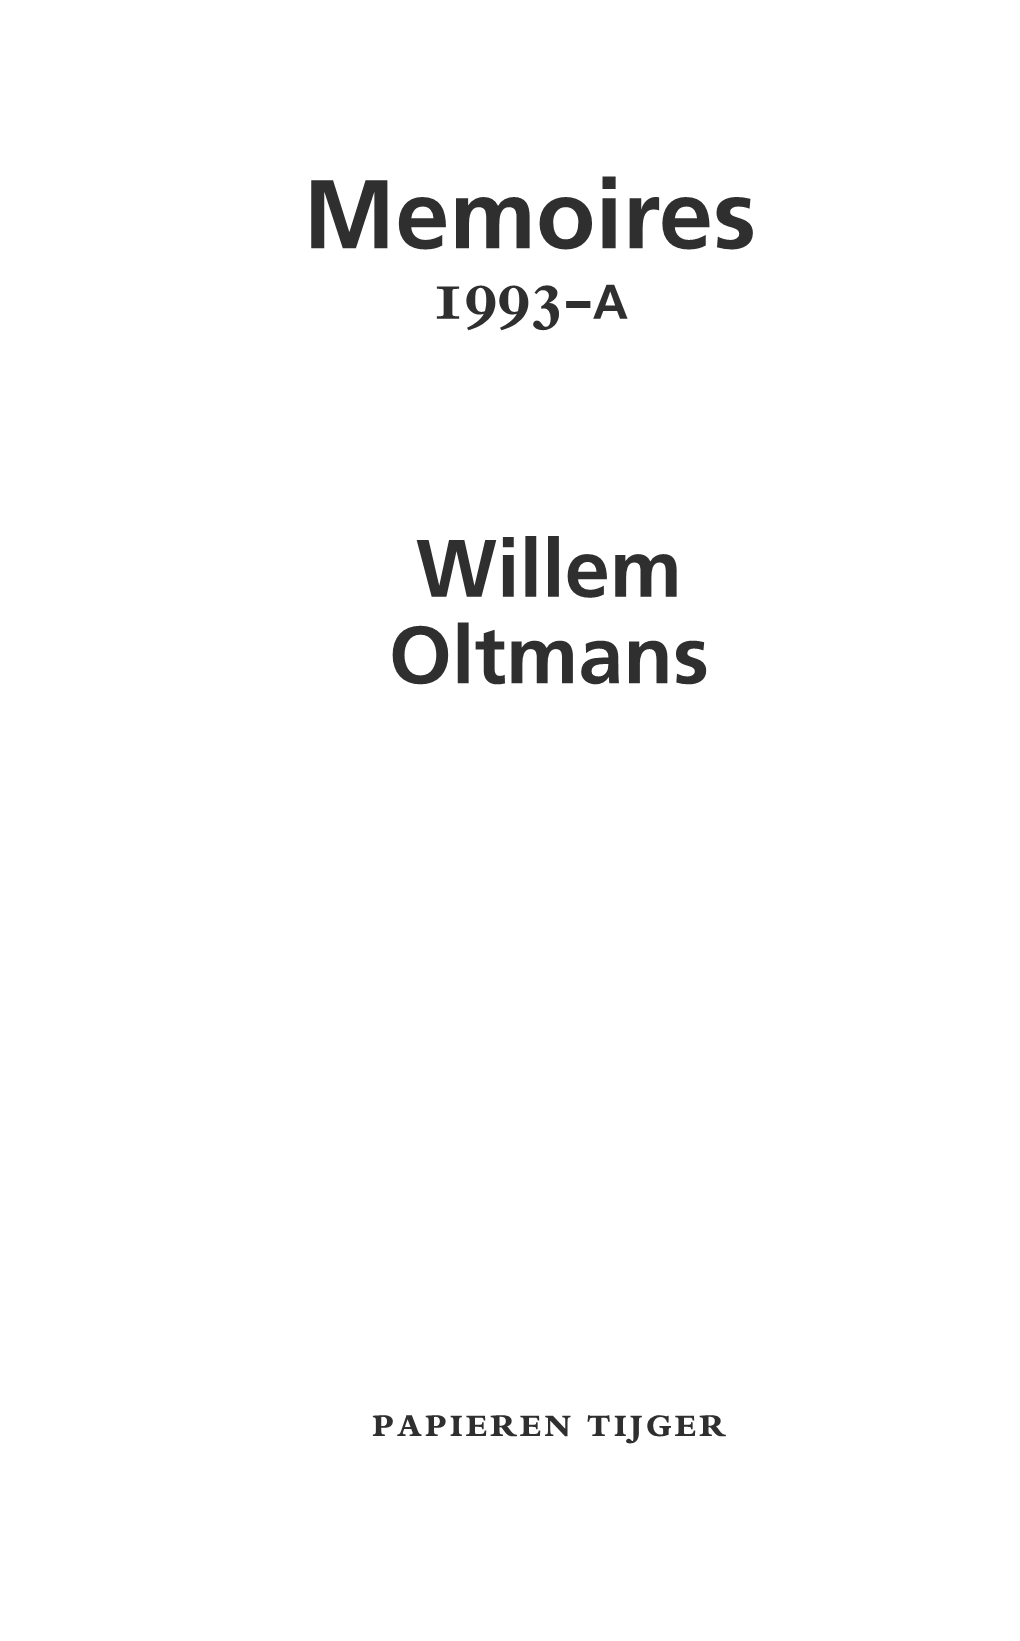 A Willem Oltmans